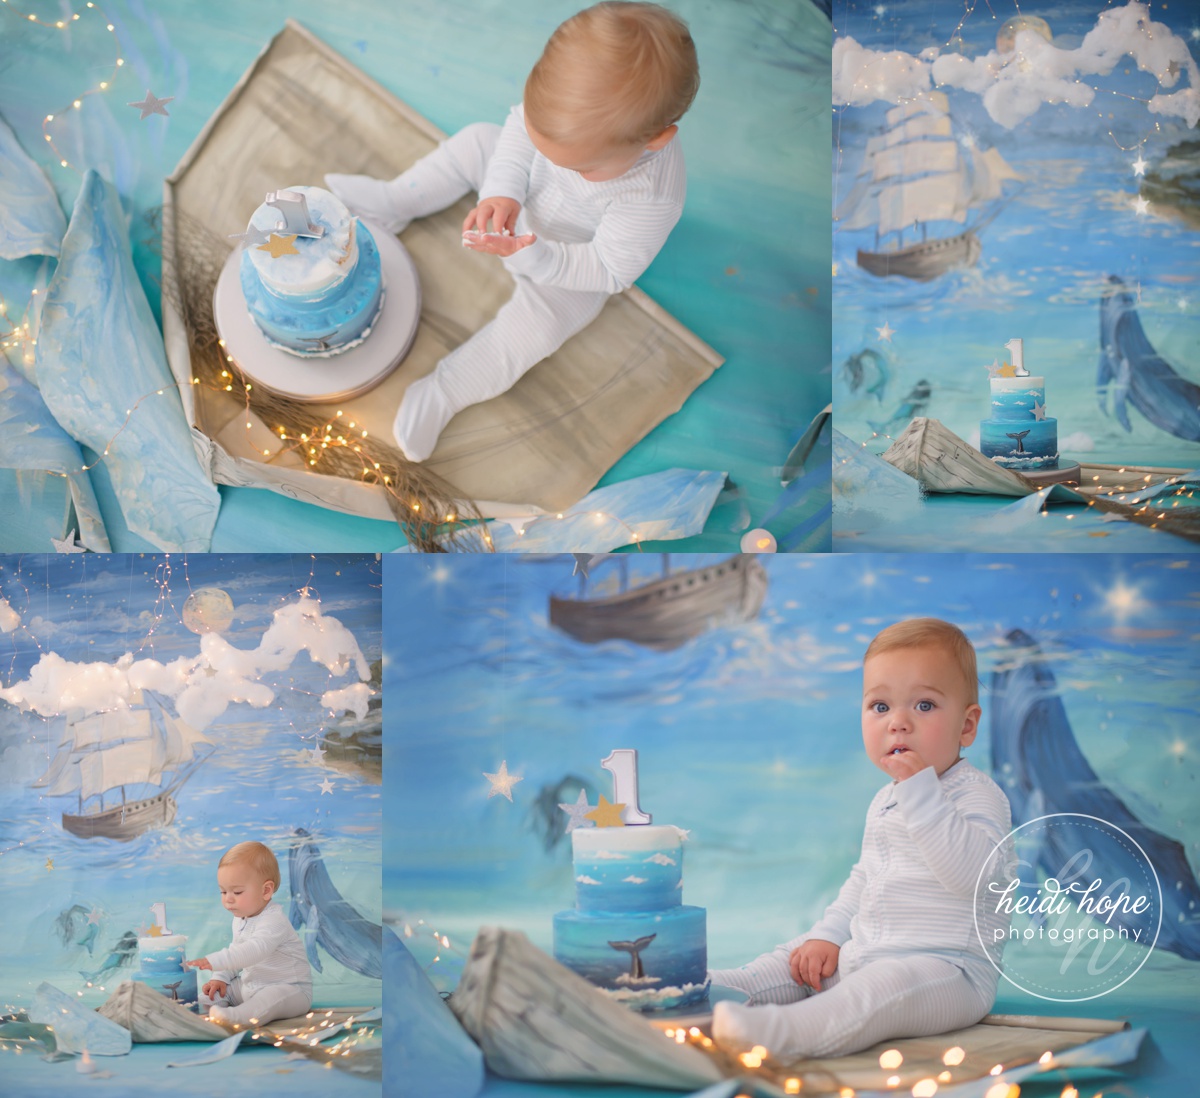 land of nod nautical peter pan magical background first birthday cakesmash01 (4)